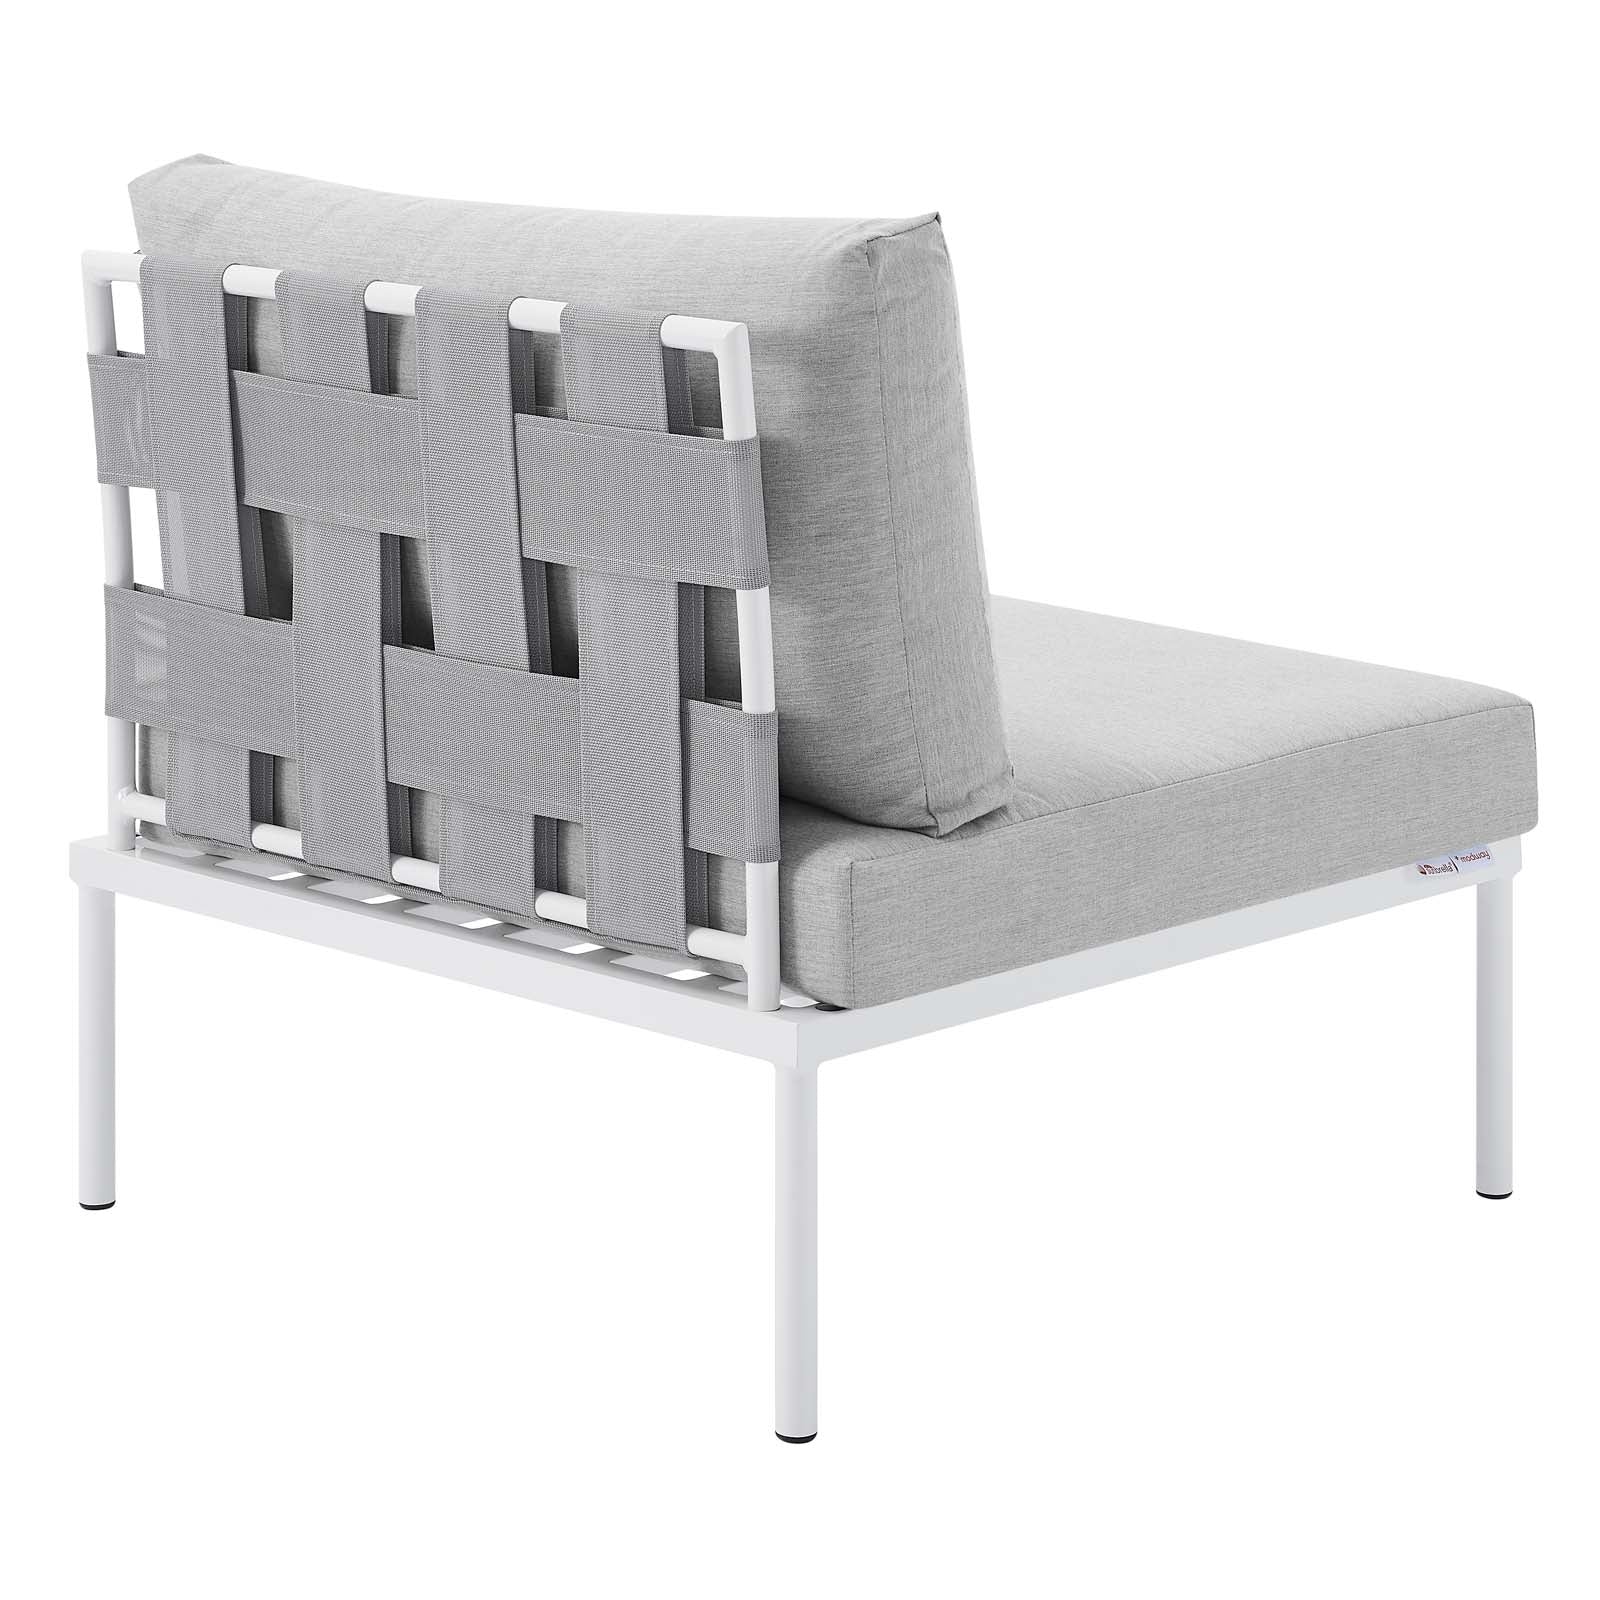 Harmony 8-Piece Sunbrella® Outdoor Patio All Mesh Sectional Sofa Set-Outdoor Set-Modway-Wall2Wall Furnishings